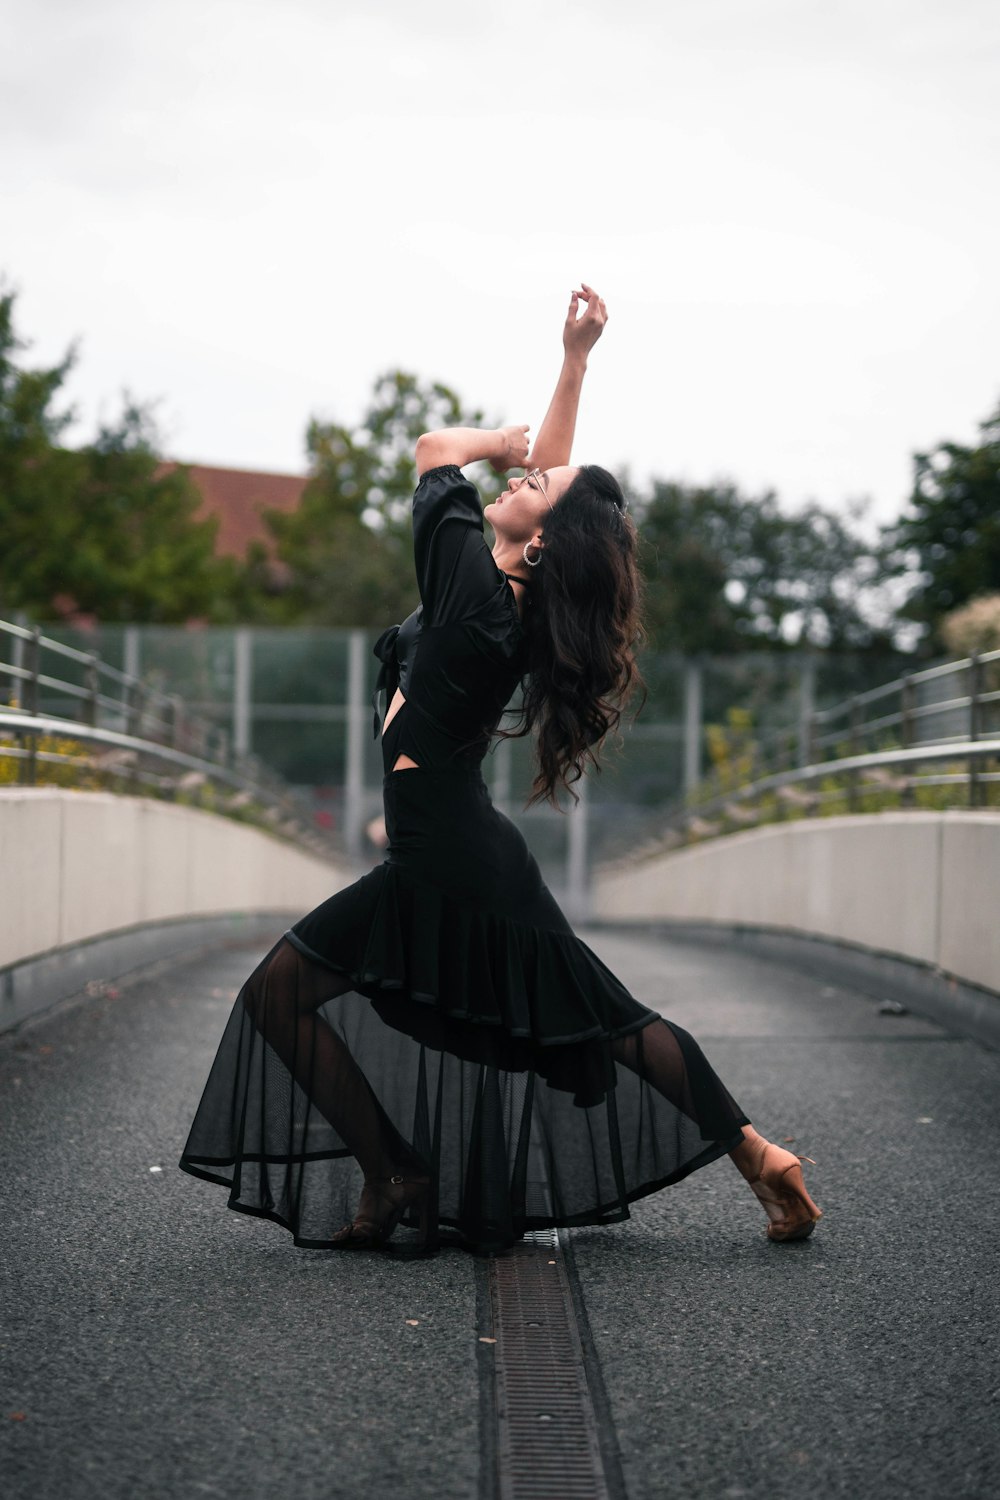 a woman in a black dress dancing on a bridge